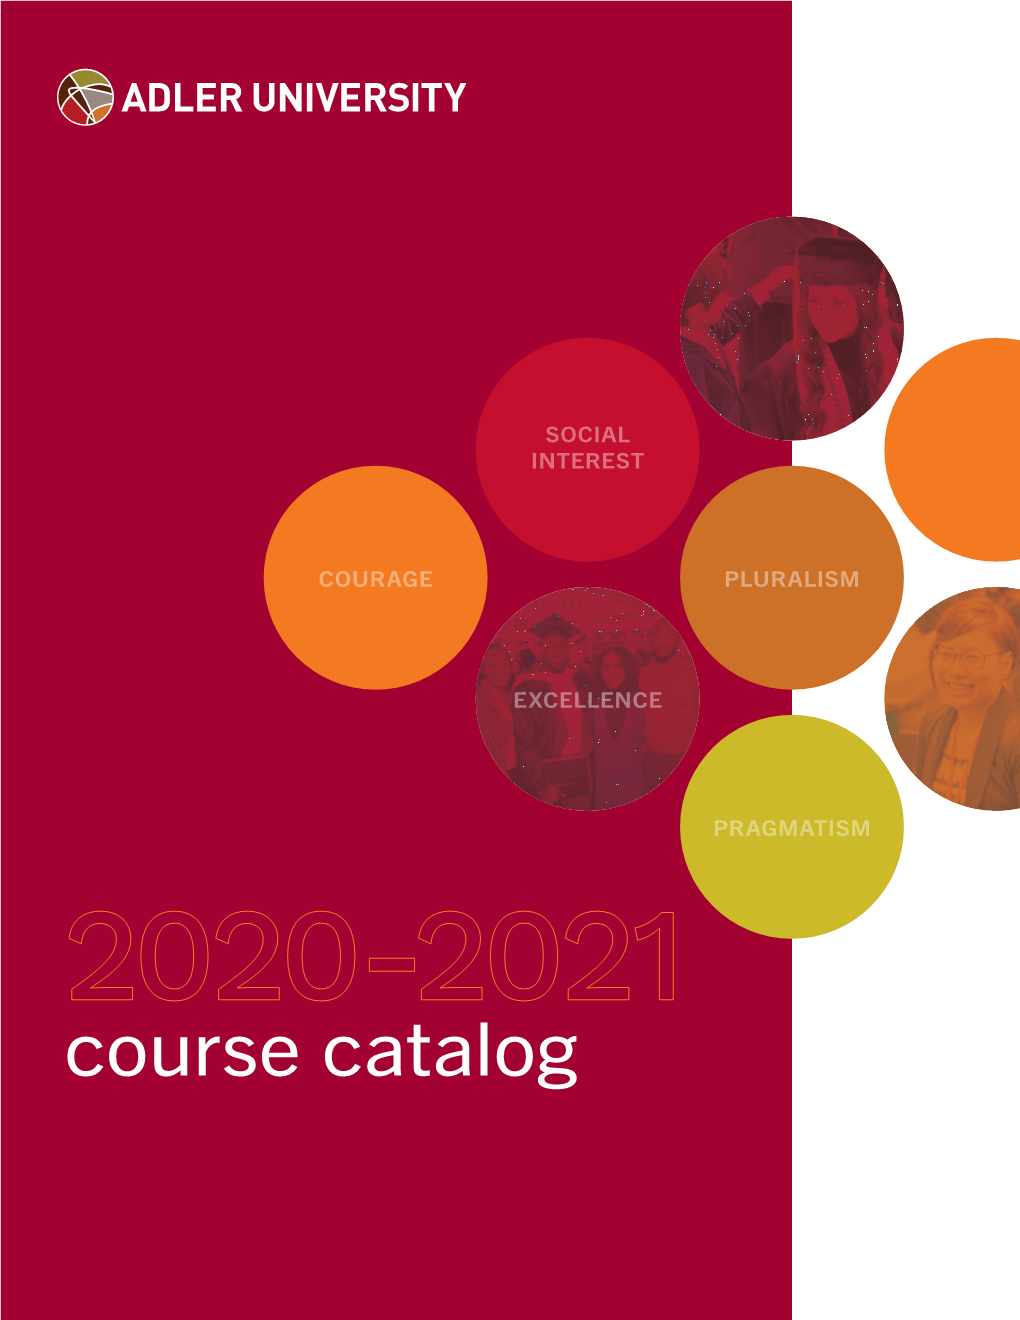 Course Catalog Adler University